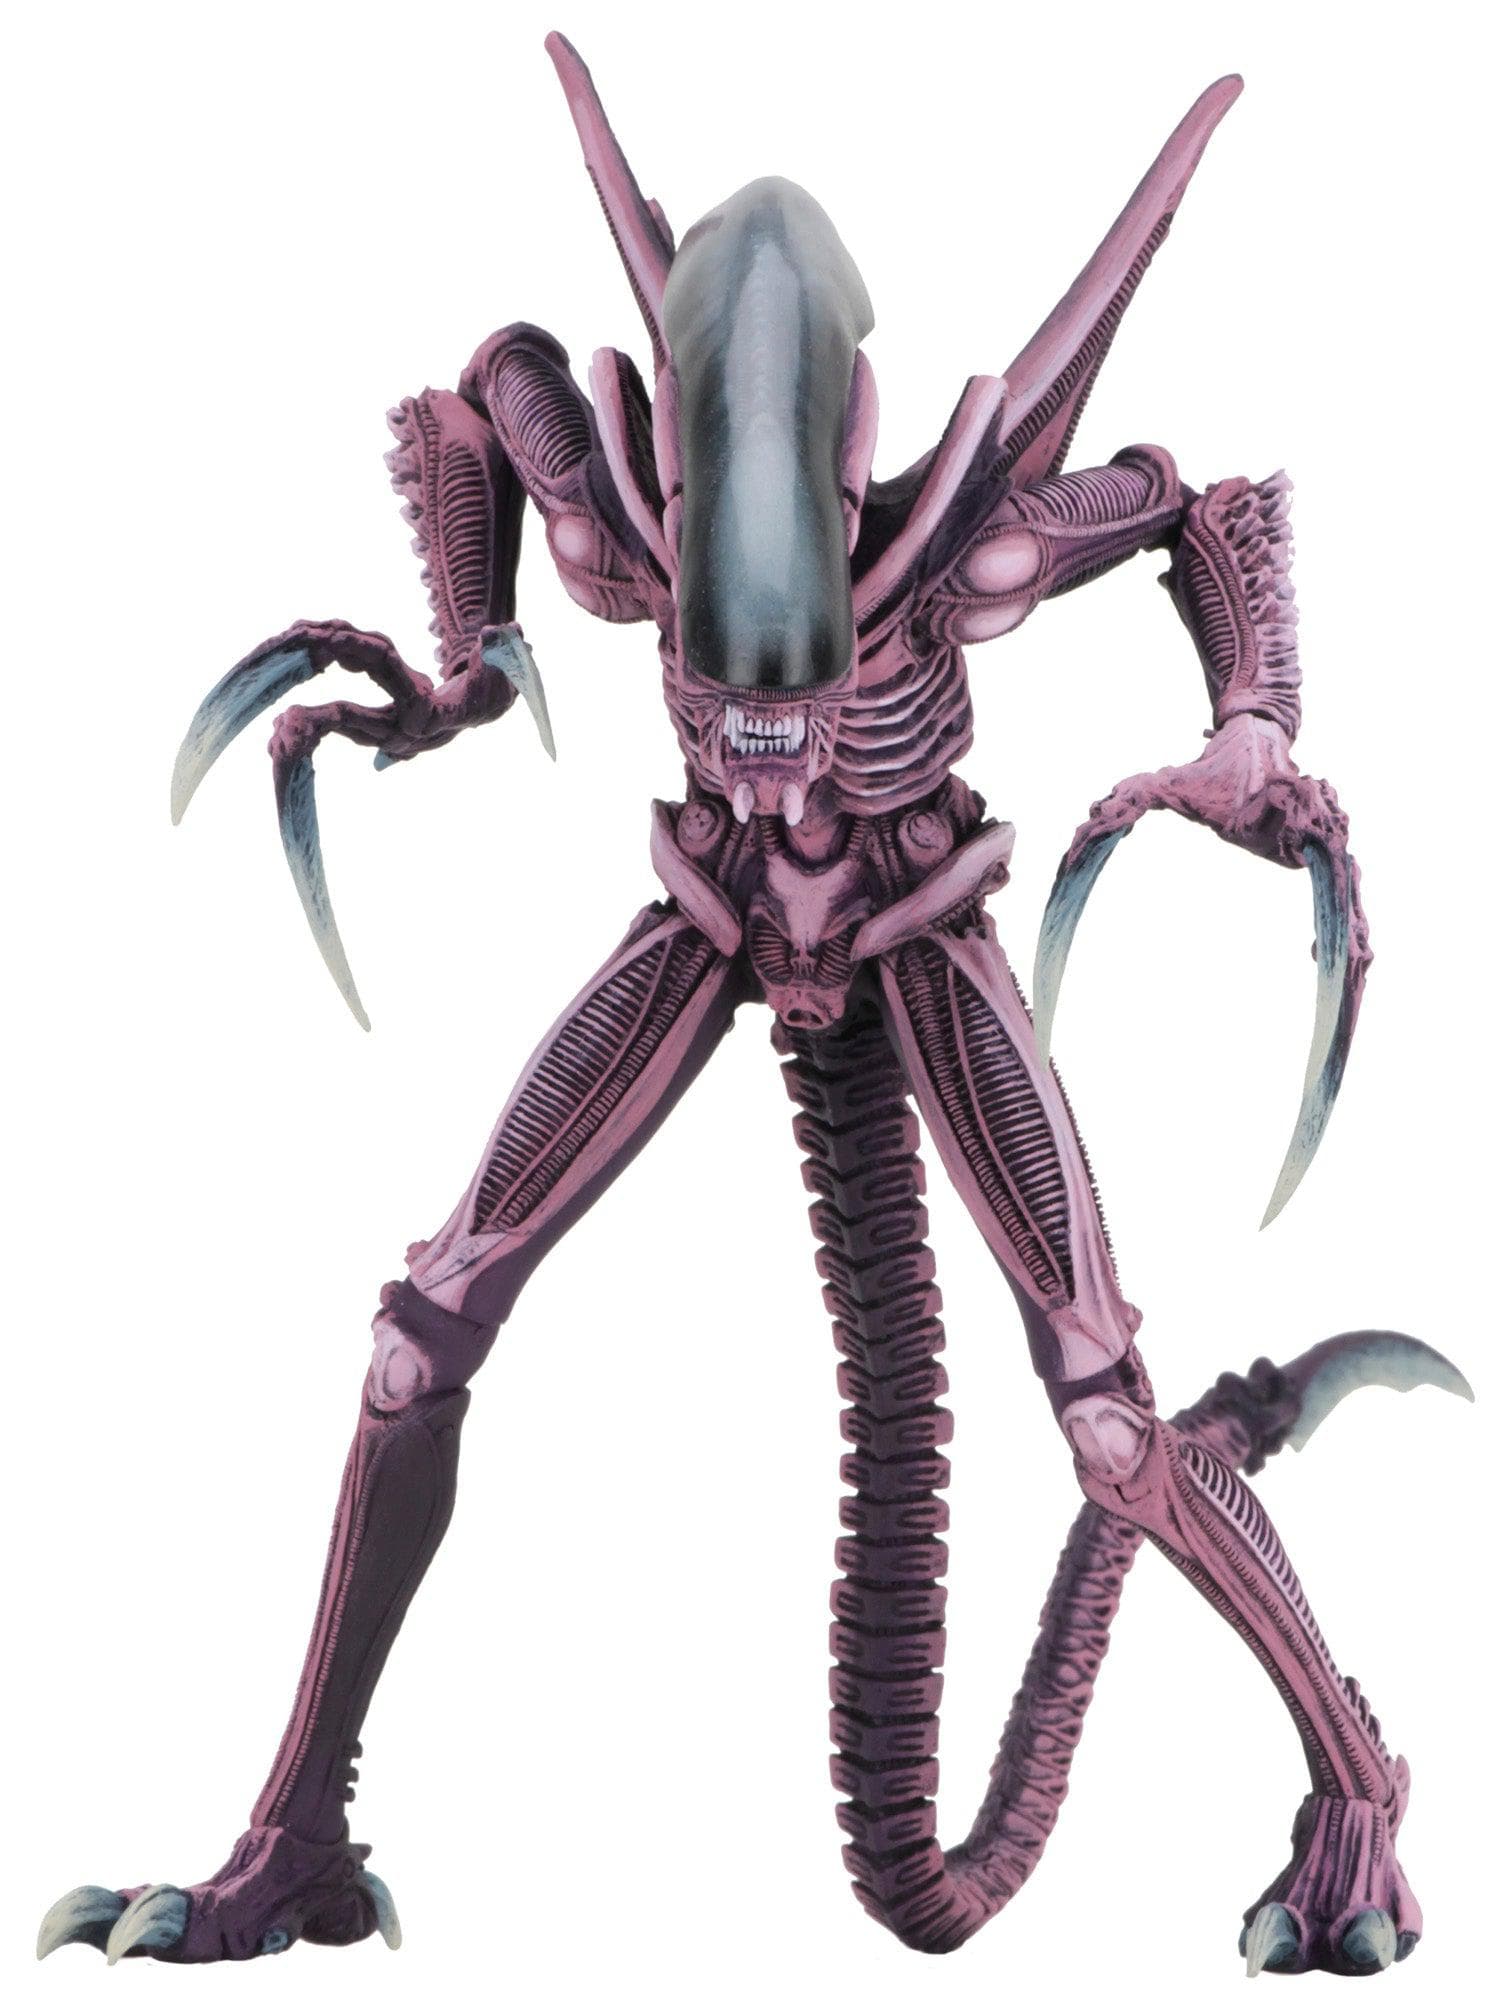 NECA - Alien vs Predator - 7" Scale Action Figure - Arcade Razor Claws Alien - costumes.com